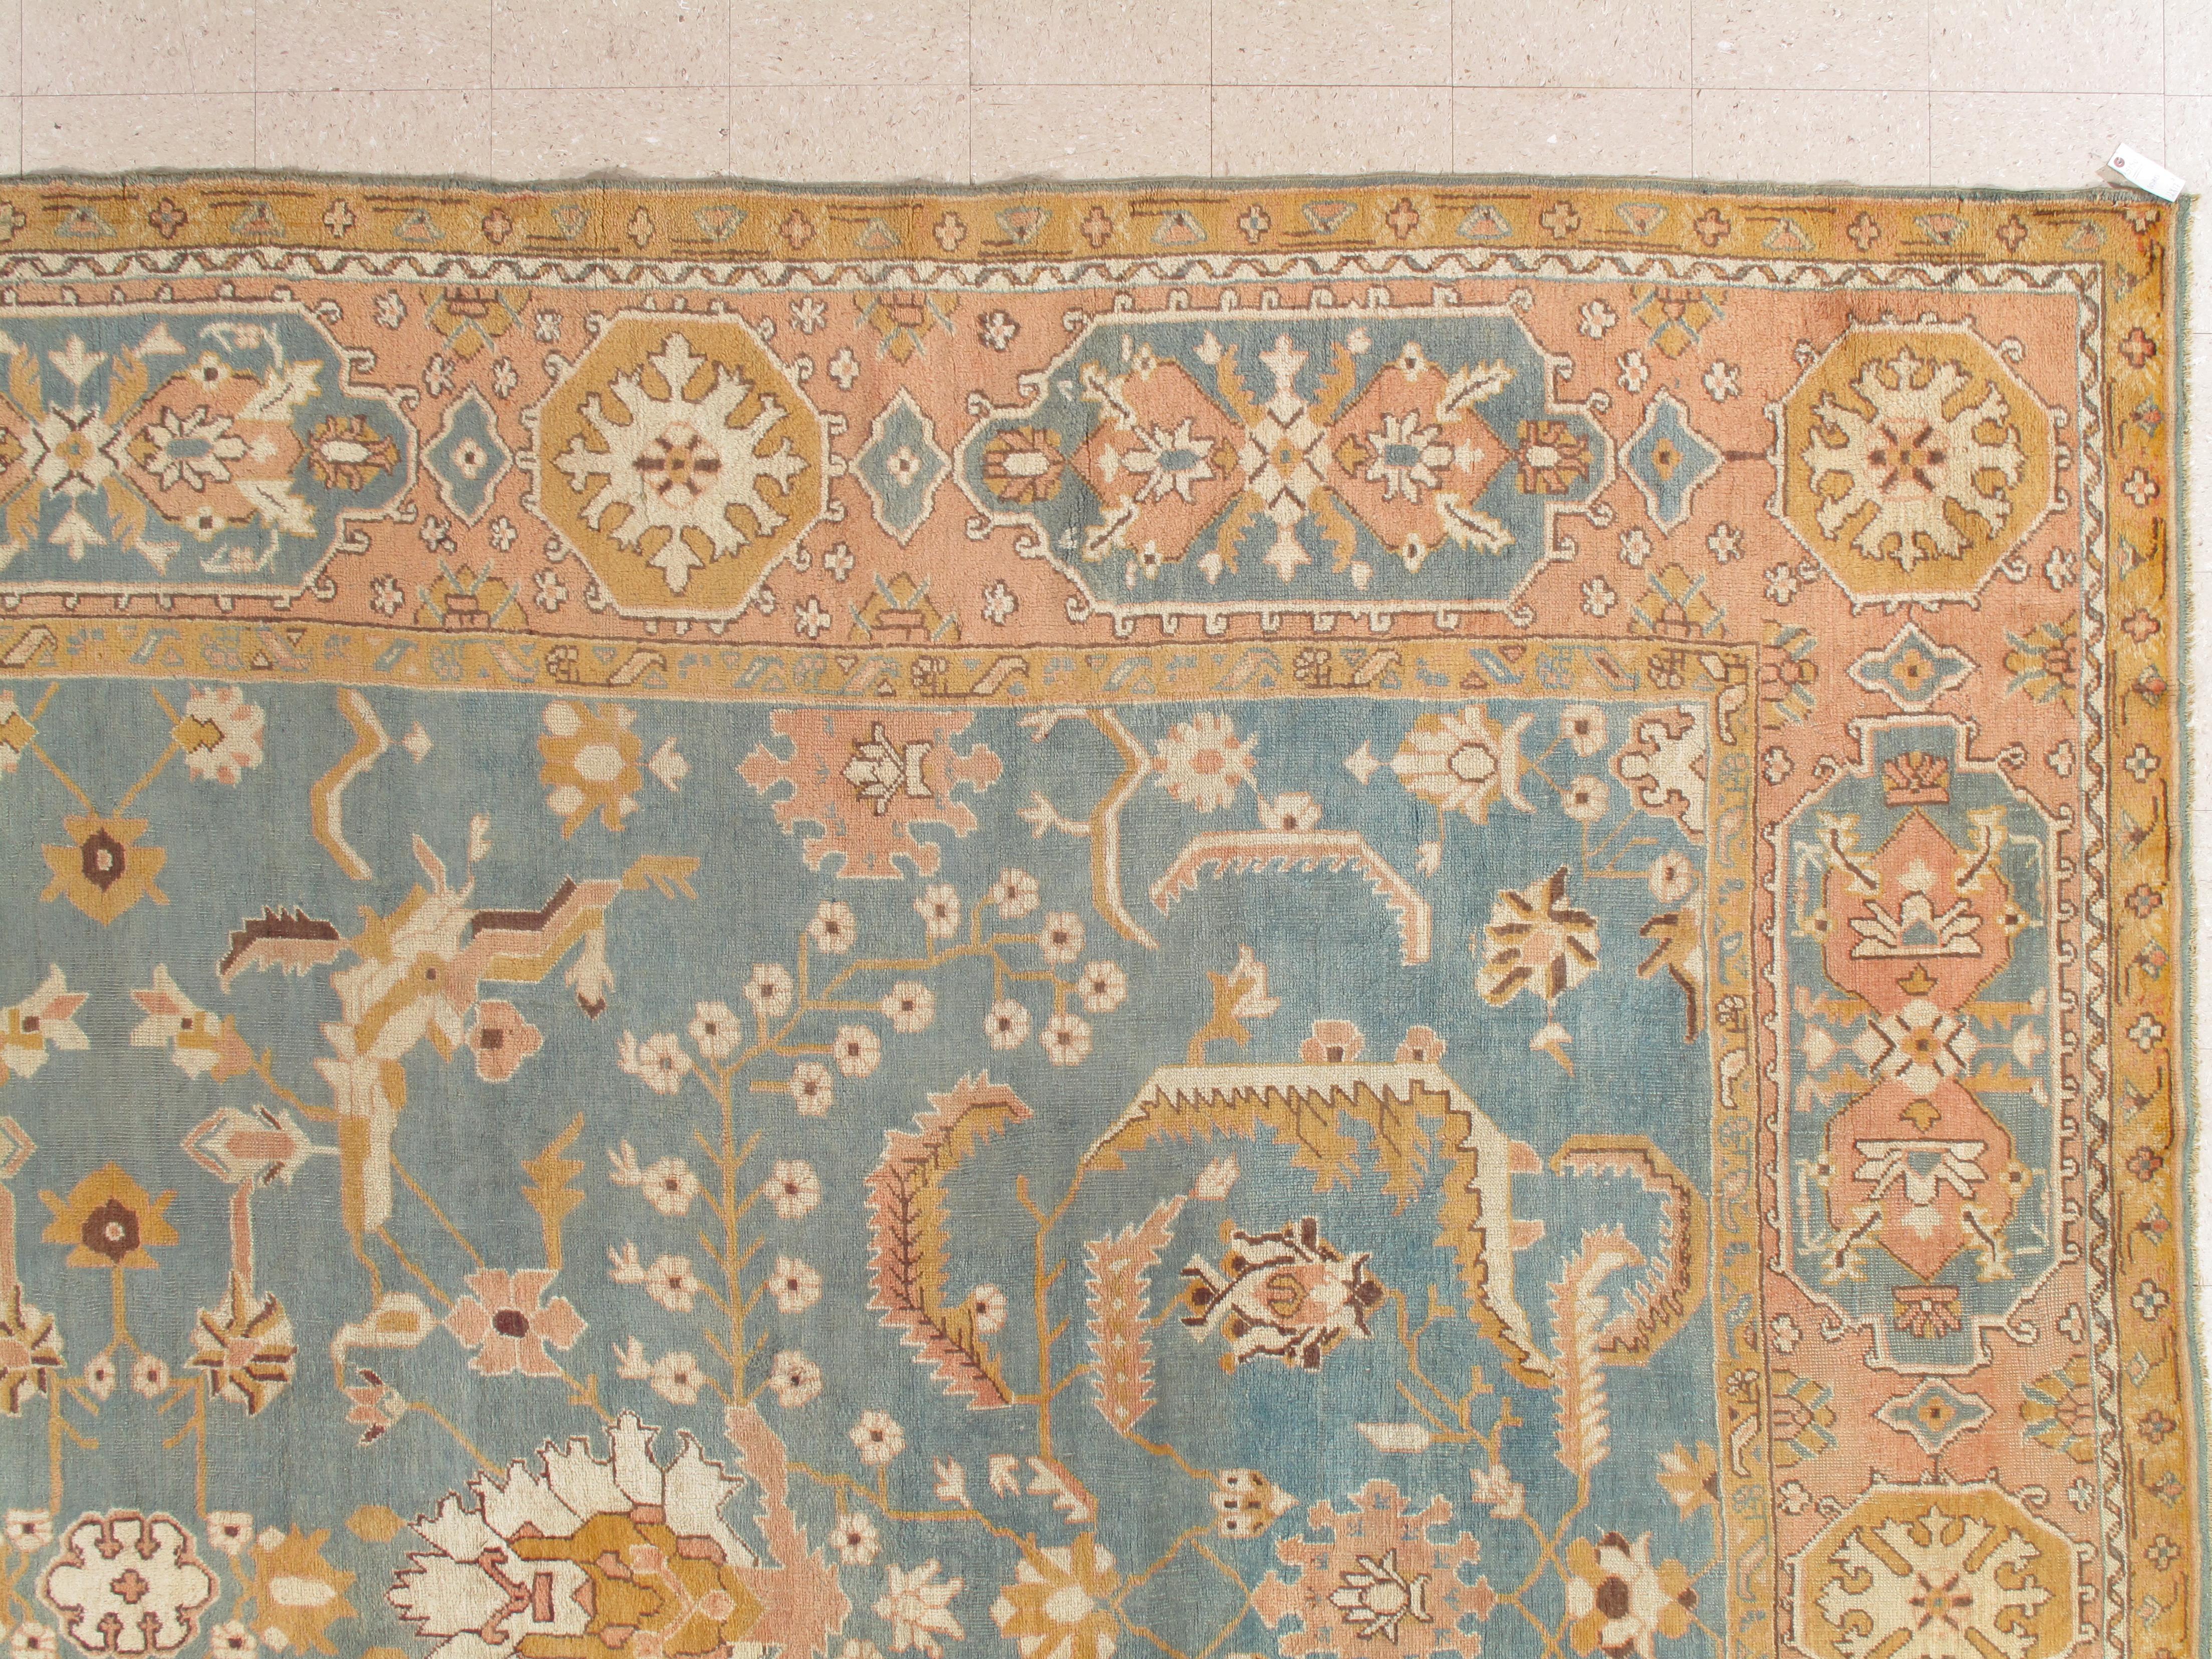 19th Century Antique Oushak Carpet, Oriental Rug, Handmade Blue/Grey, Ivory, Peach